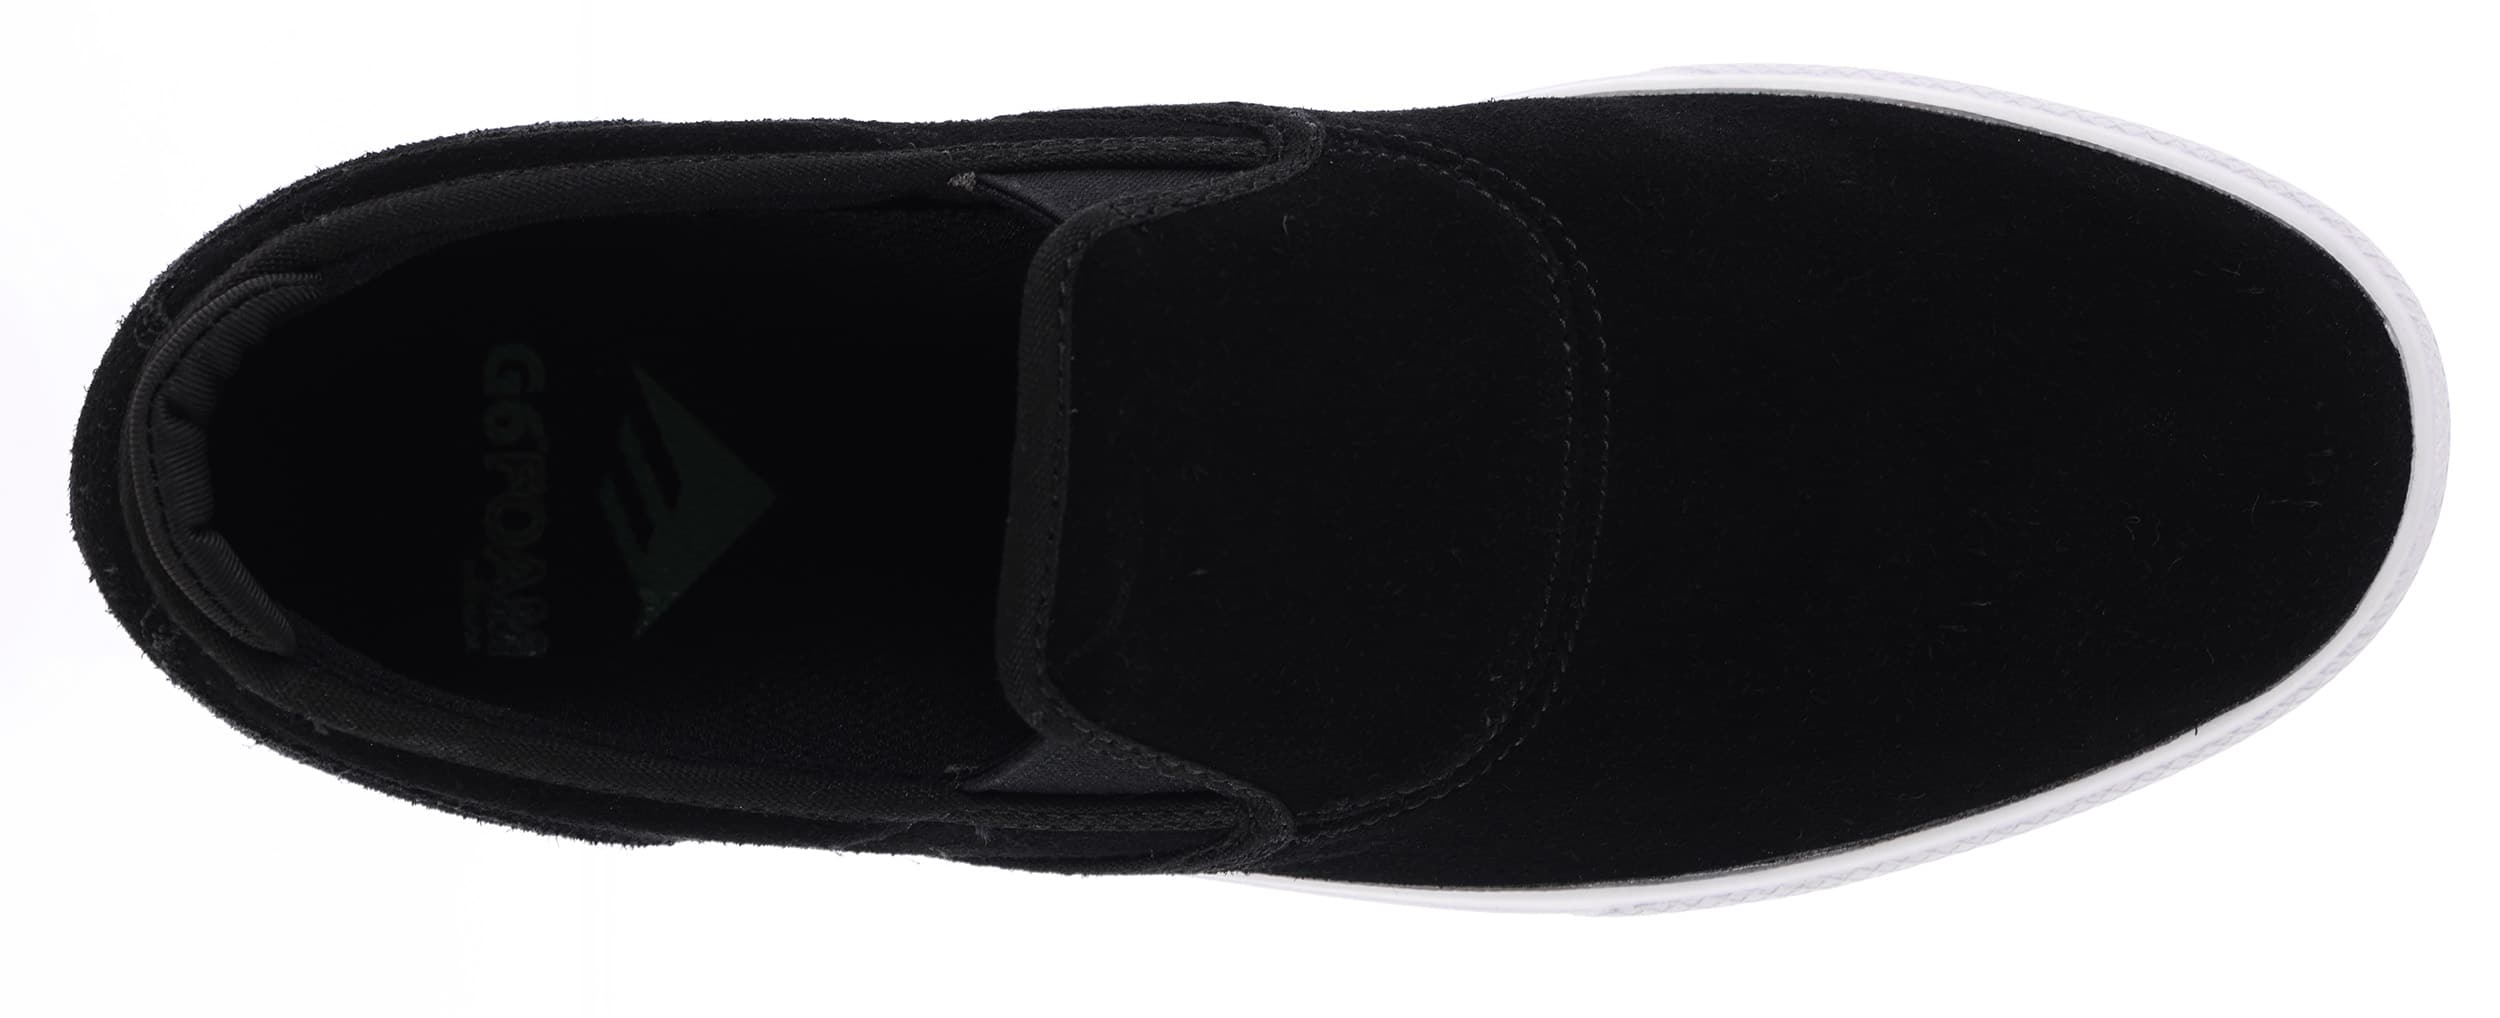 Emerica Wino G6 Cup Slip-On Shoes - black | Tactics